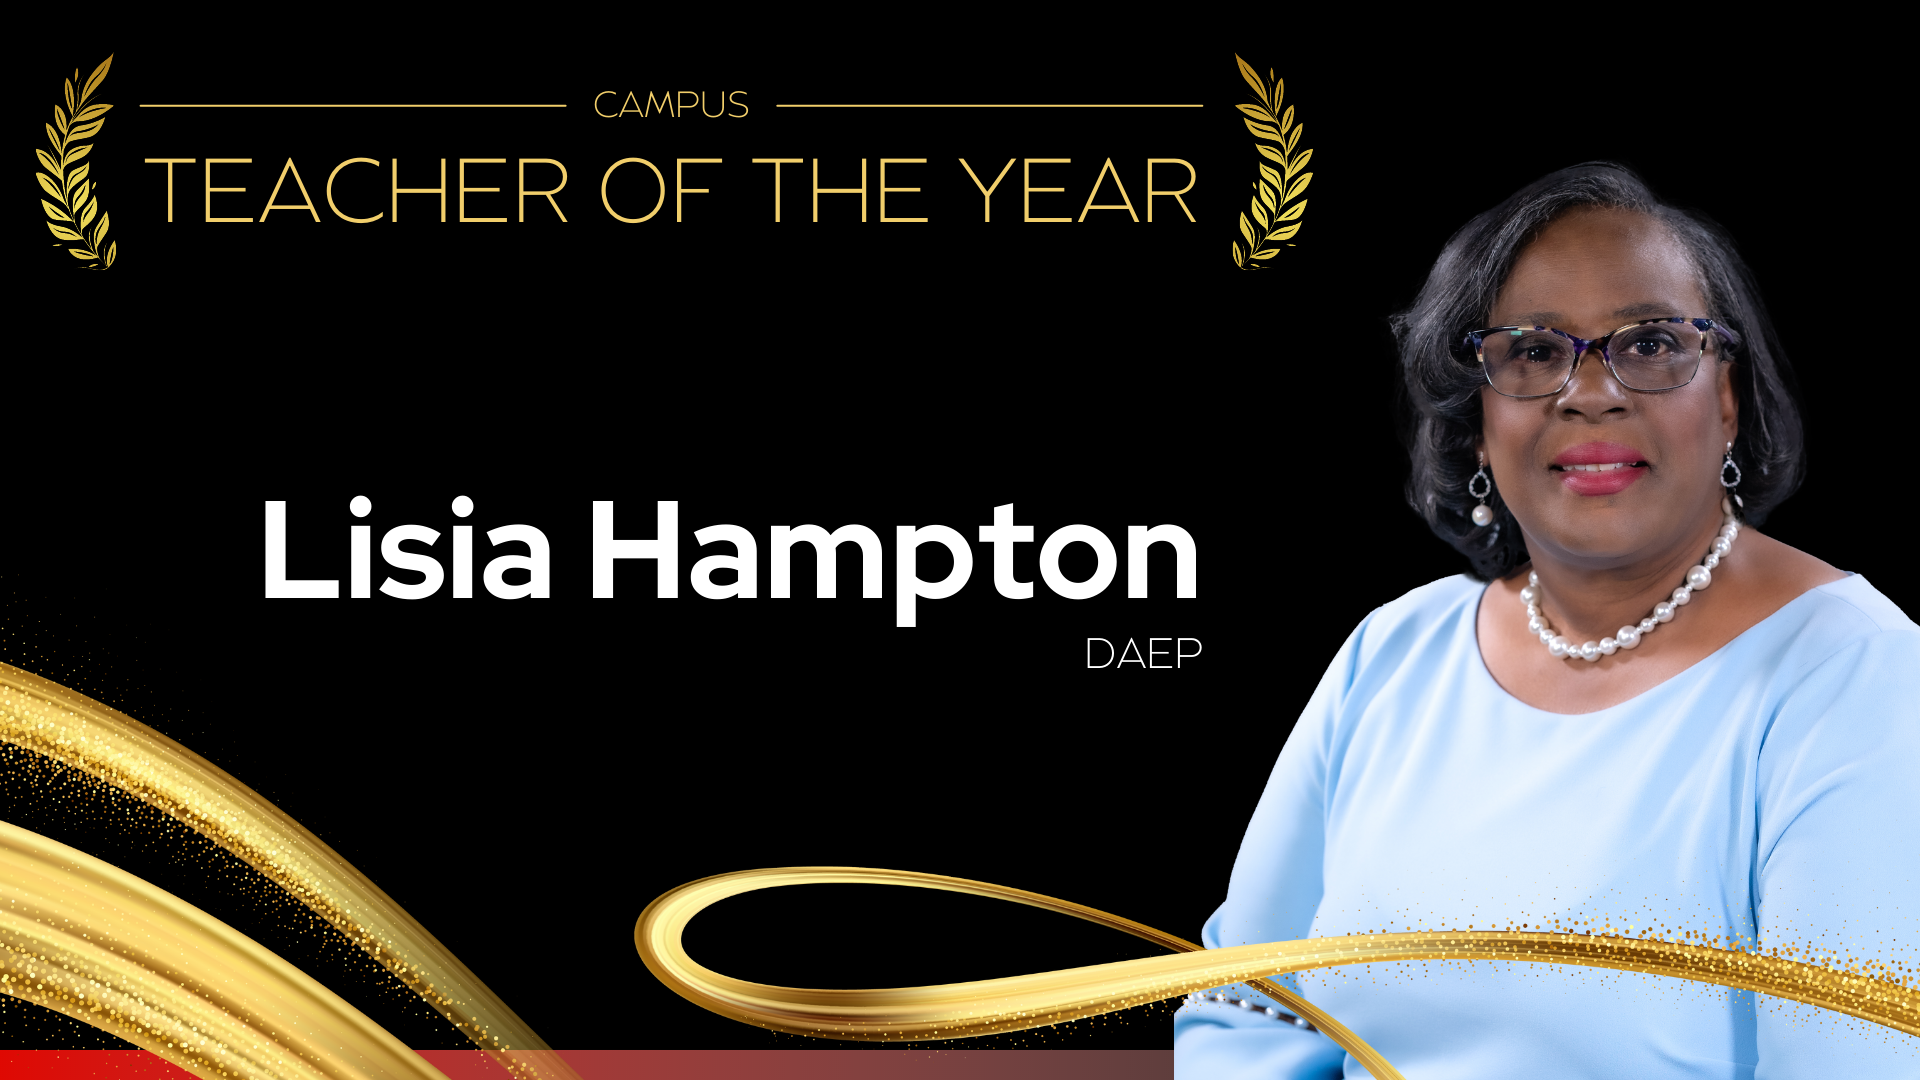 Campus Teacher of the Year DAEP - Lisia Hampton